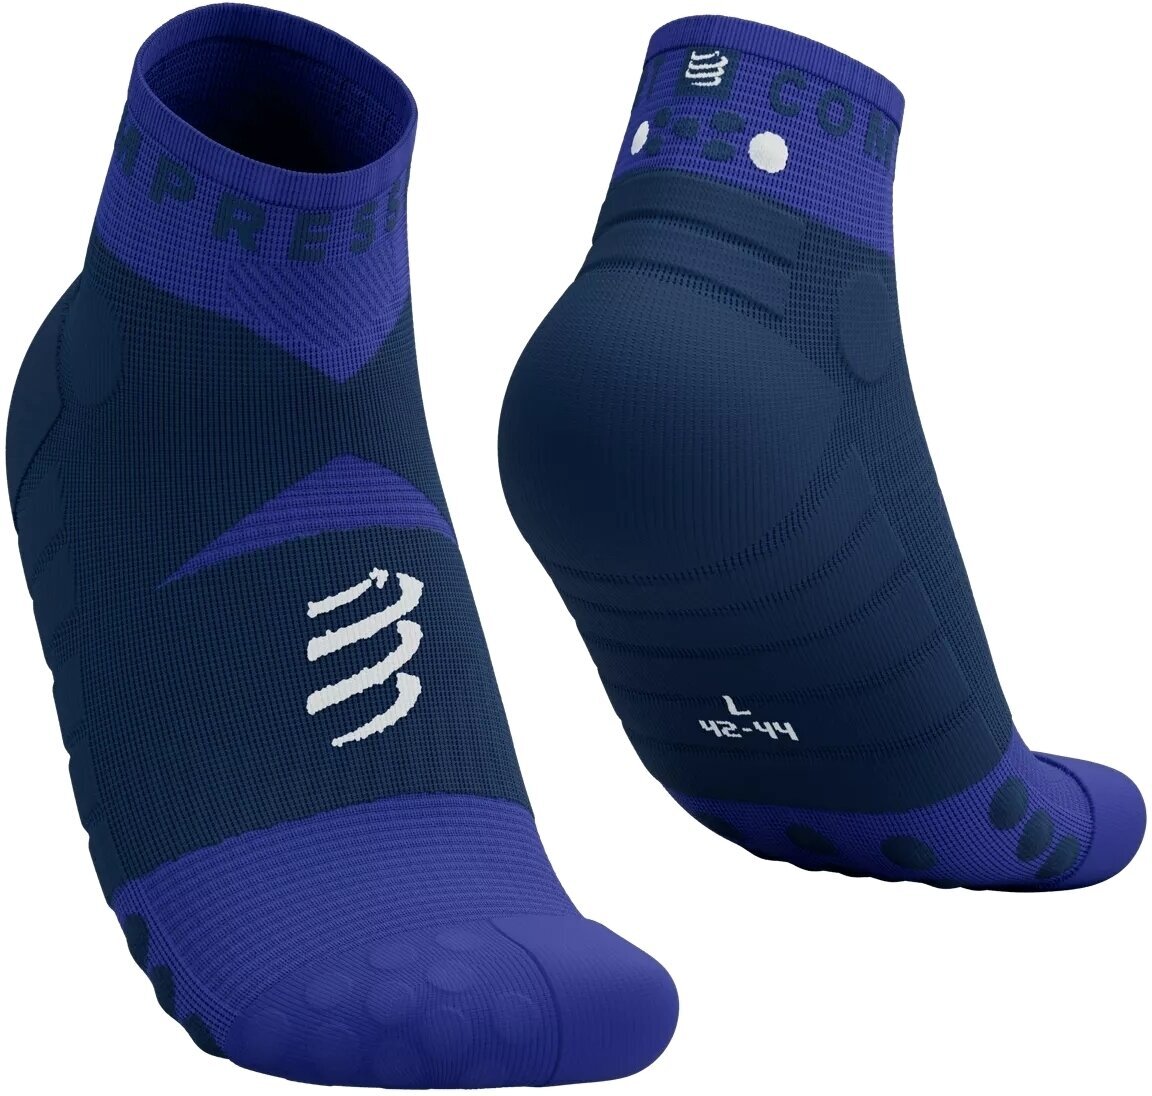 Skarpety do biegania
 Compressport Ultra Trail Low Socks Dazzling Blue/Dress Blues/White T2 Skarpety do biegania